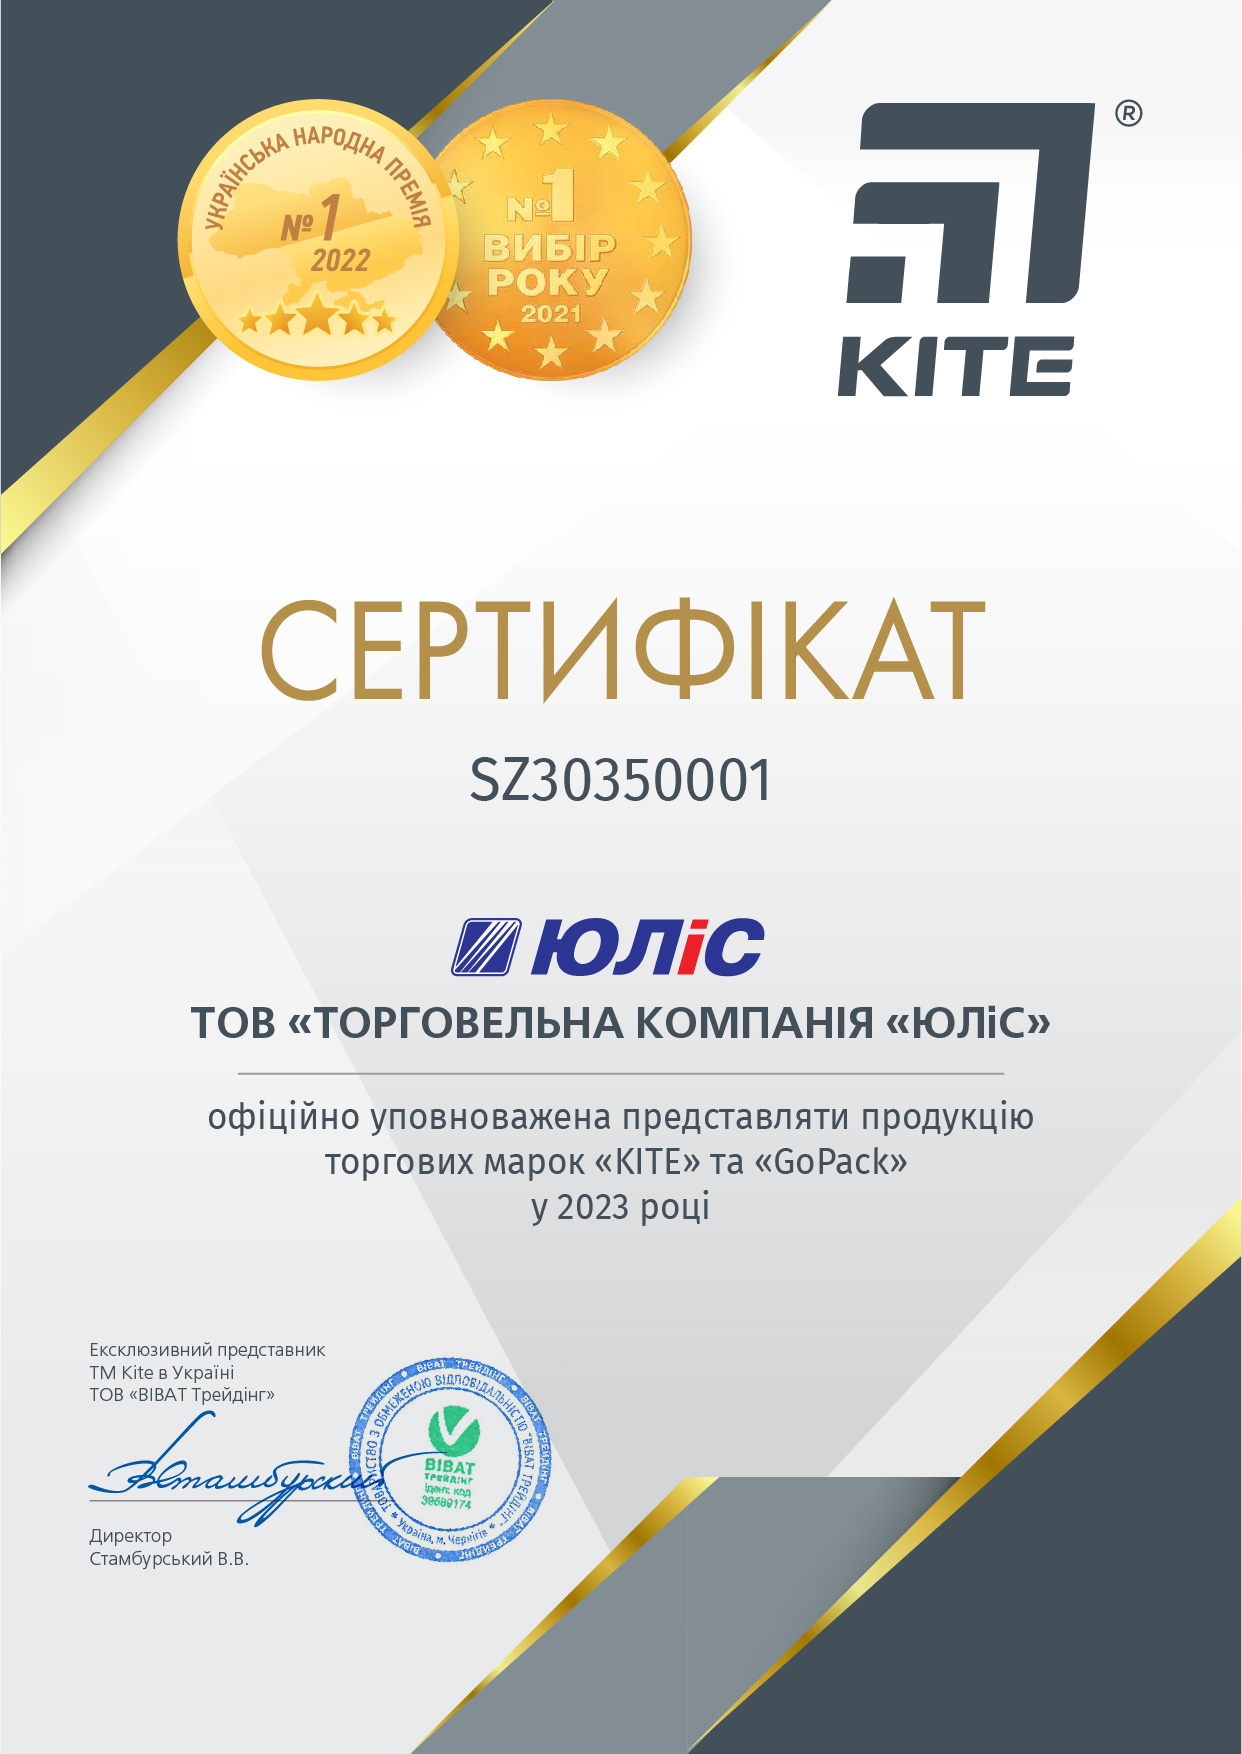 Сертификат ТМ "Kite" та "GoPack"